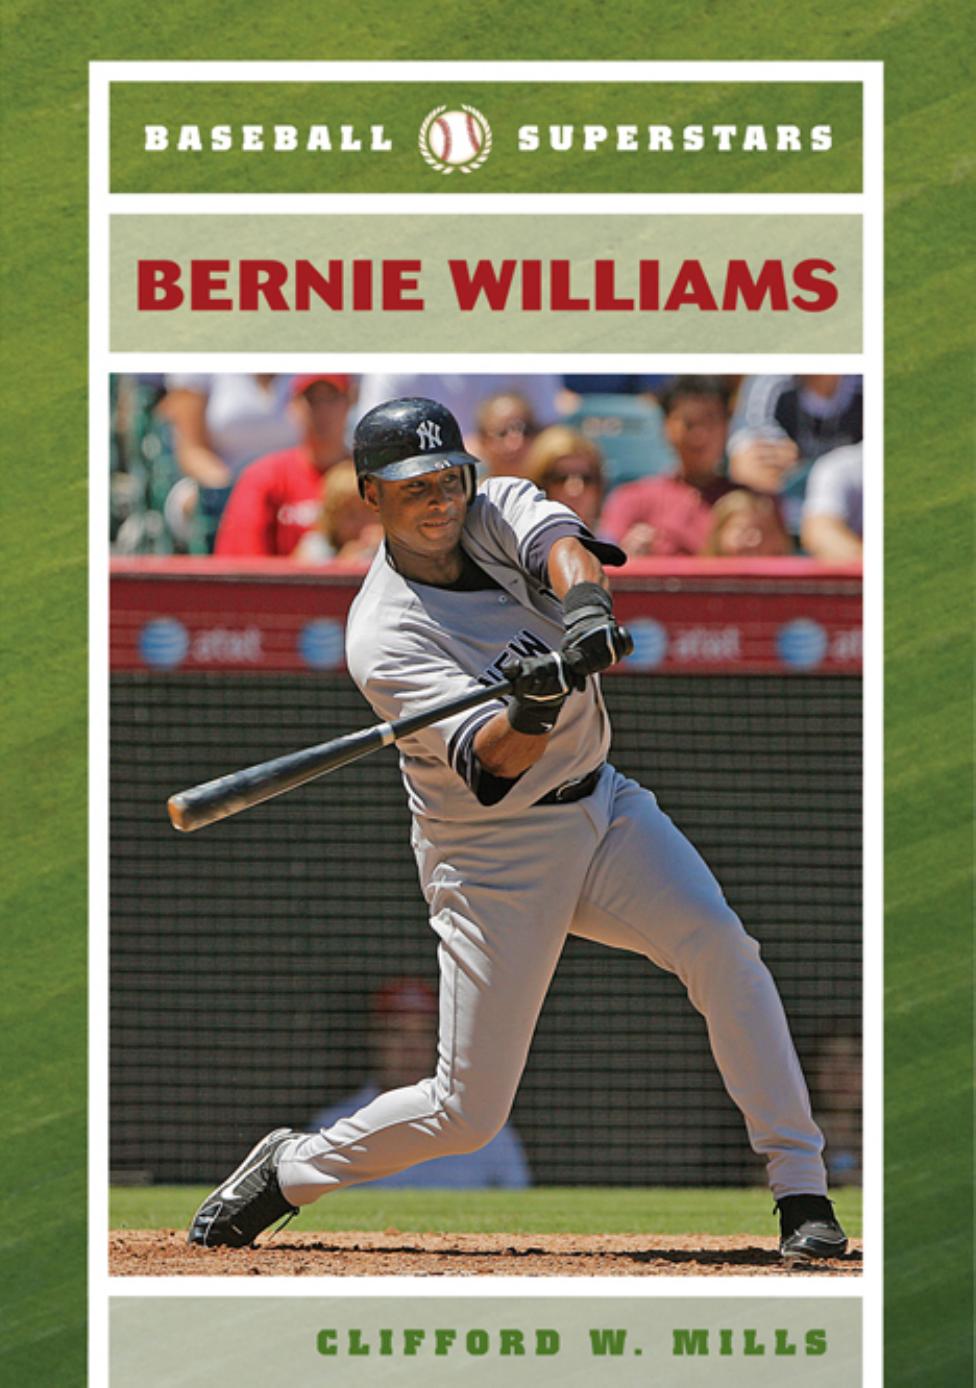 Baseball Superstars by Bernie Williams